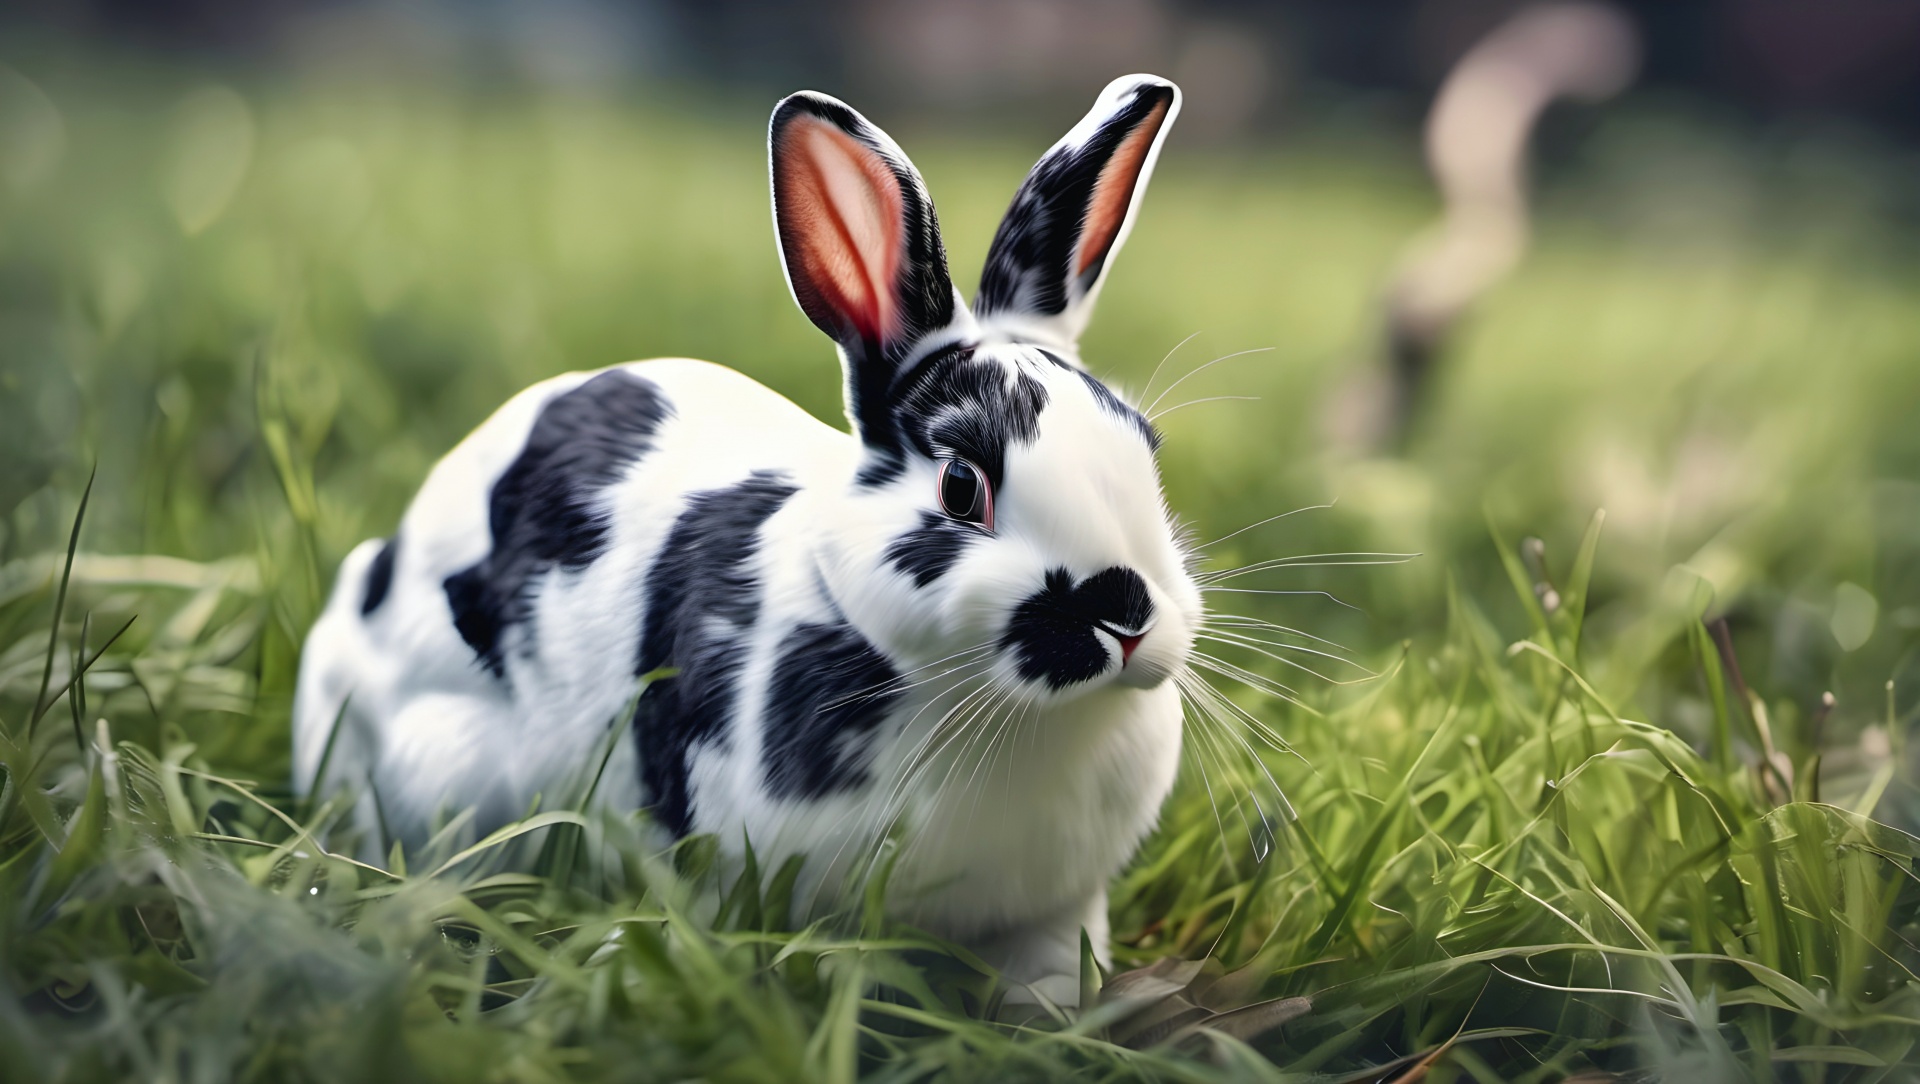 Bunny Rabbit Animal Portrait Free Stock Photo Public Domain Pictures